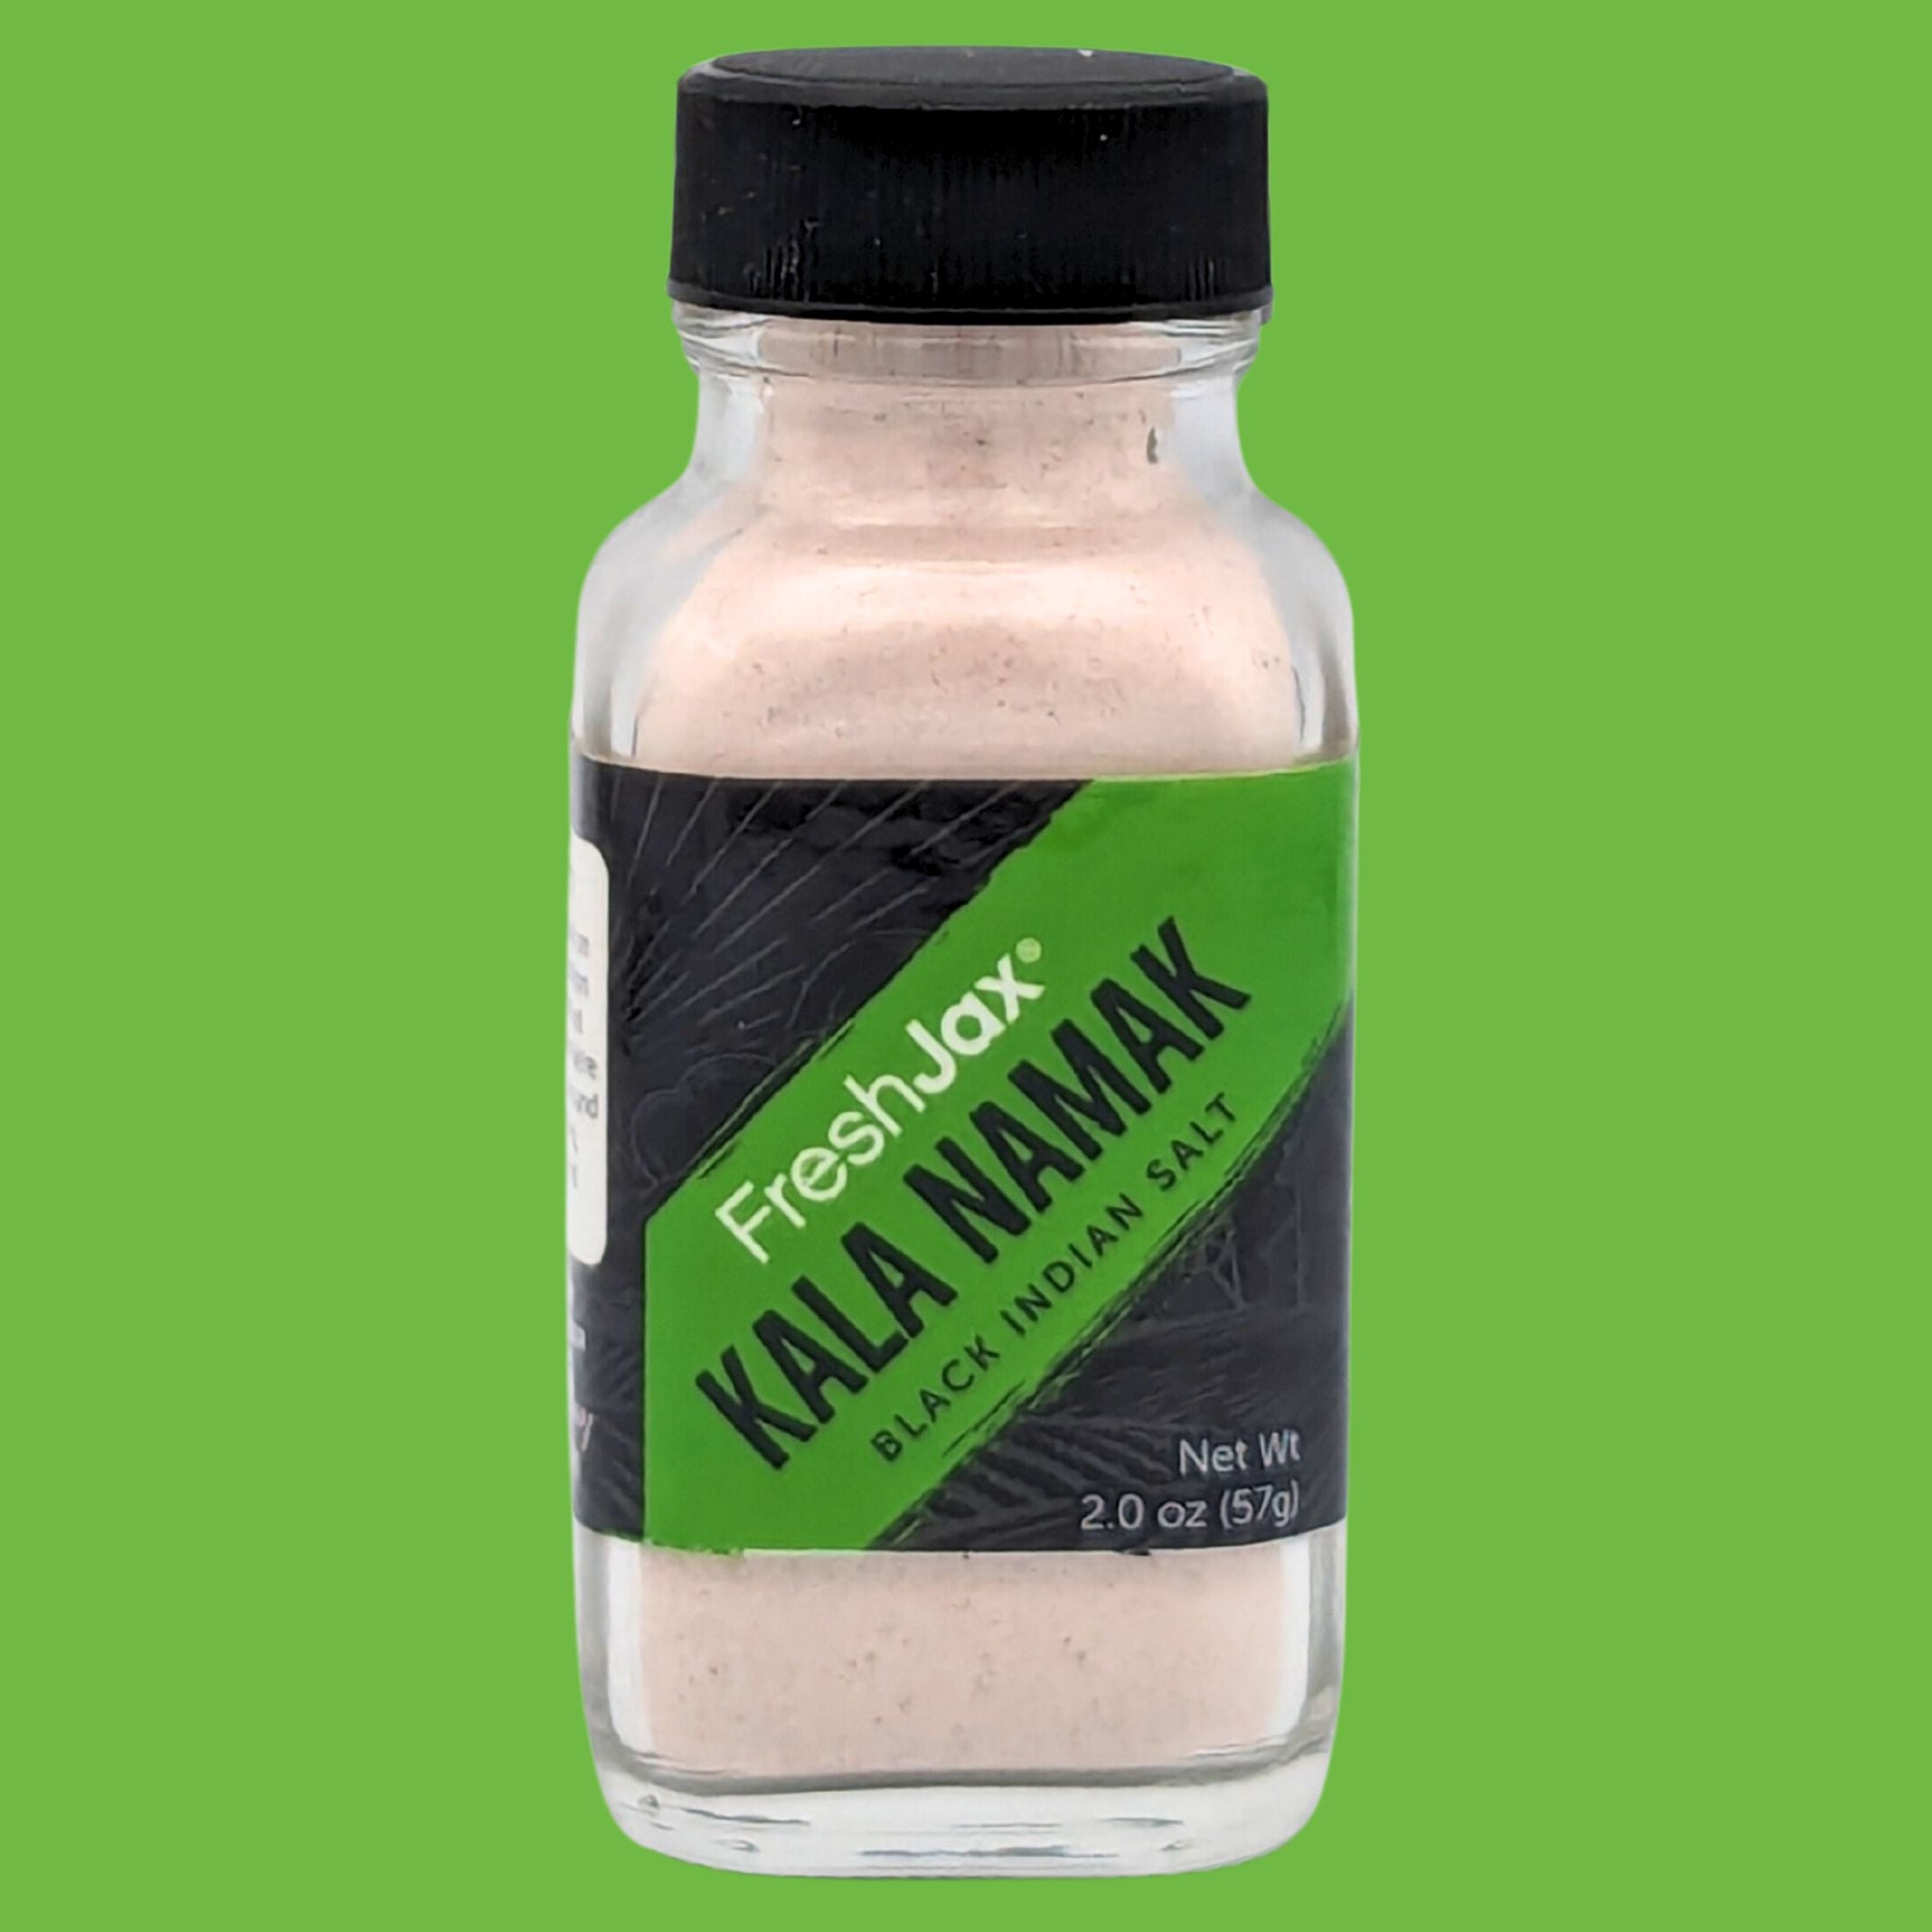 Kala Namak Indian Black Salt